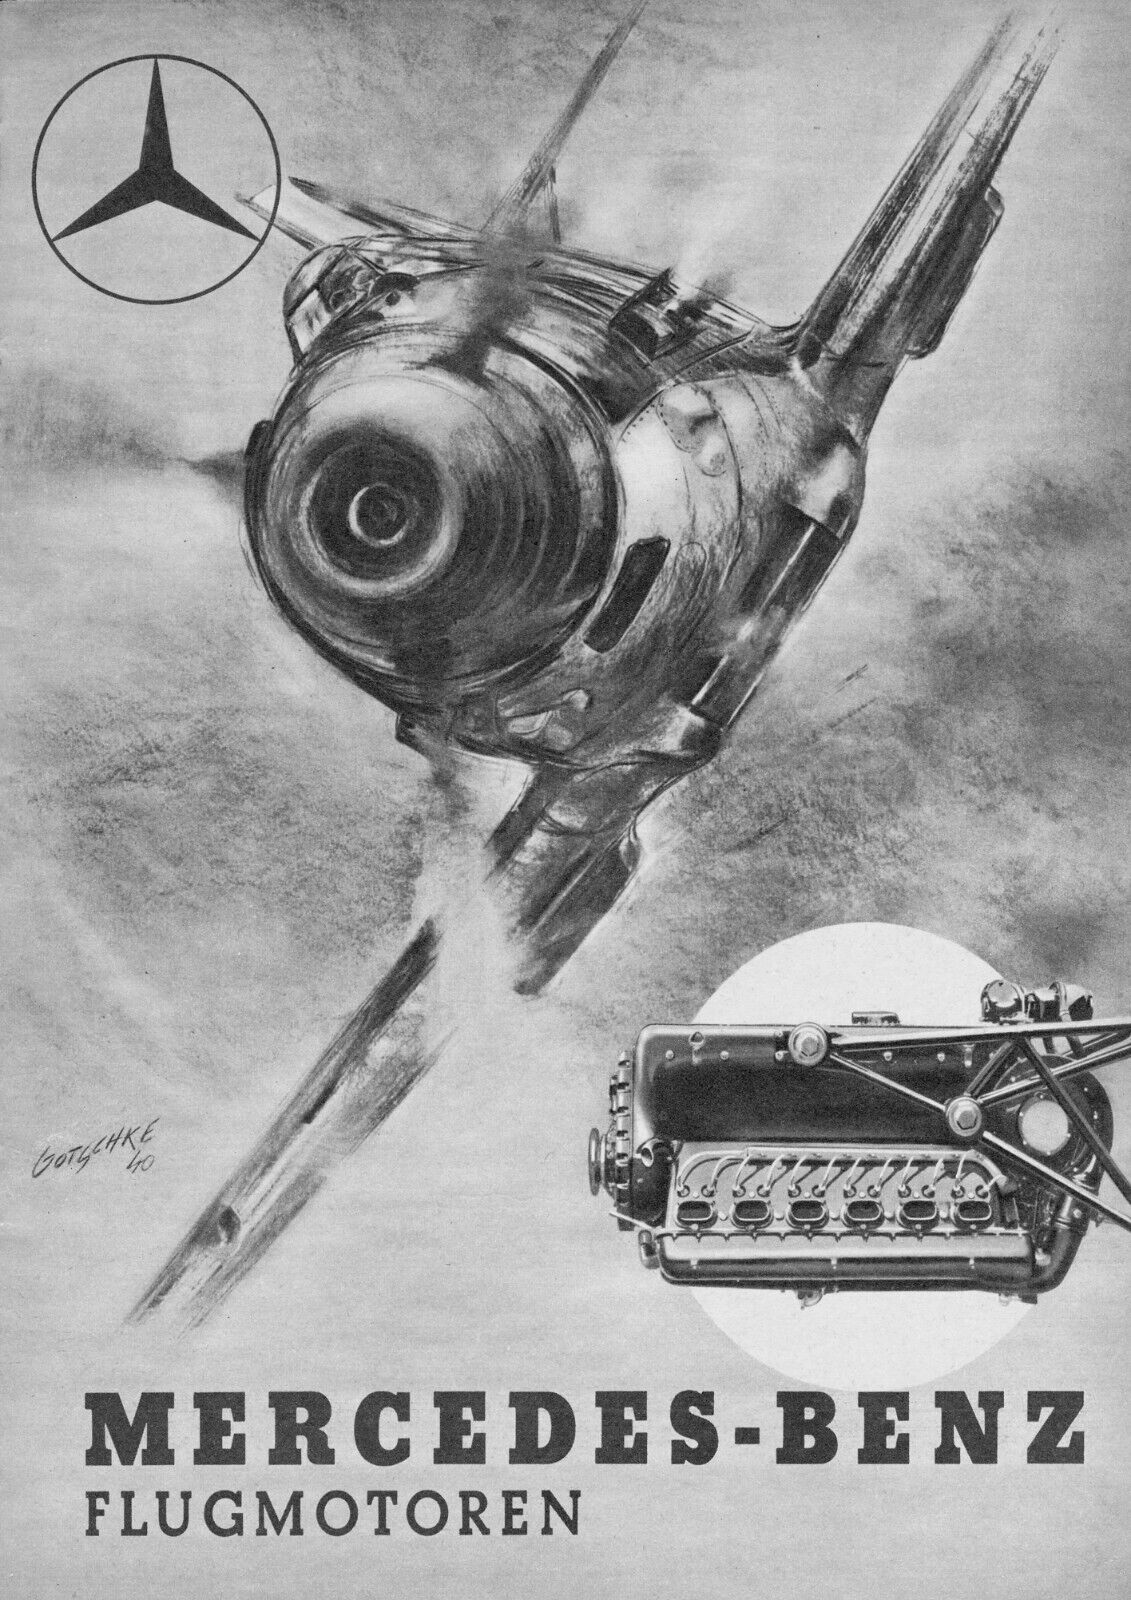 Vintage German Mercedes-Benz Flugmotoren Poster Print.